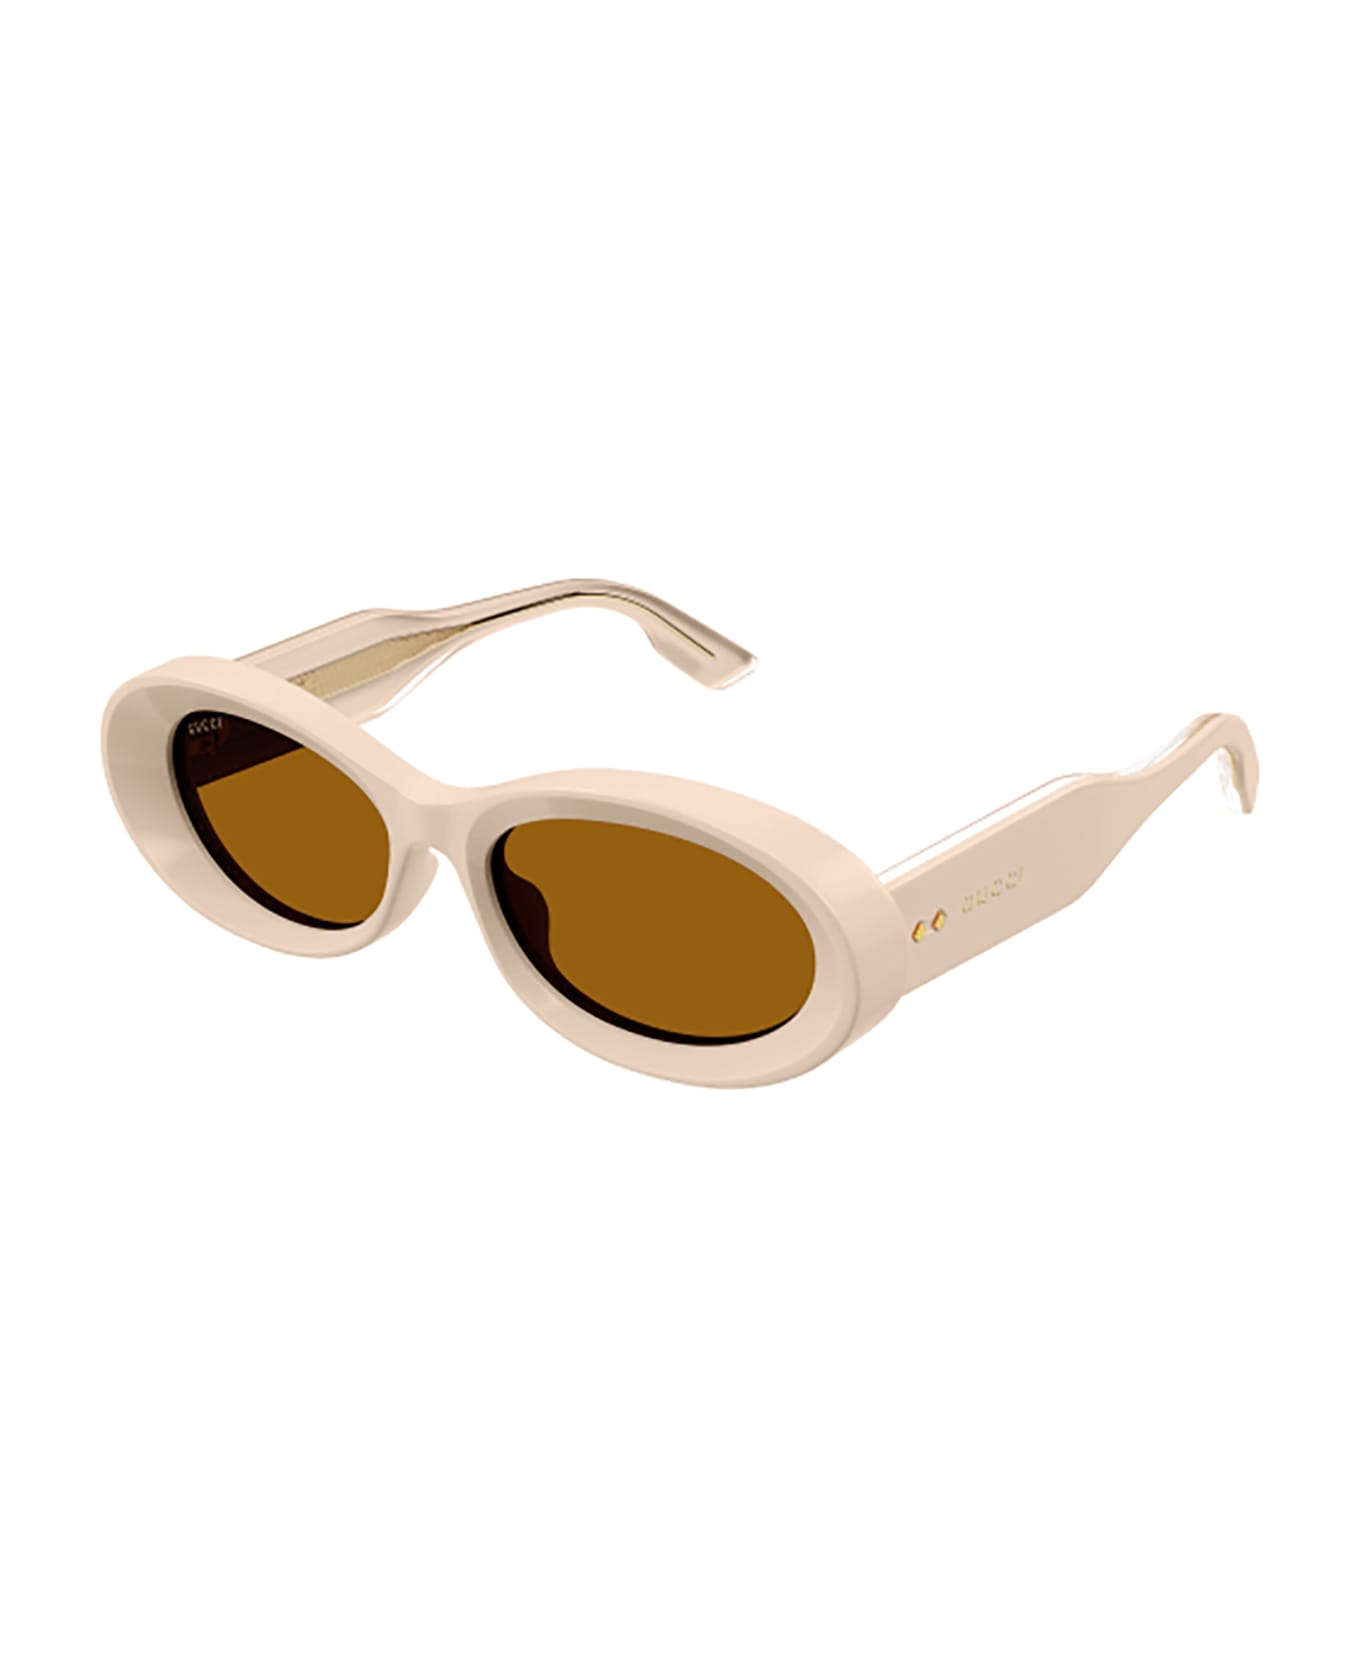 Gucci Eyewear GG1527S Sunglasses - Beige Beige Brown サングラス